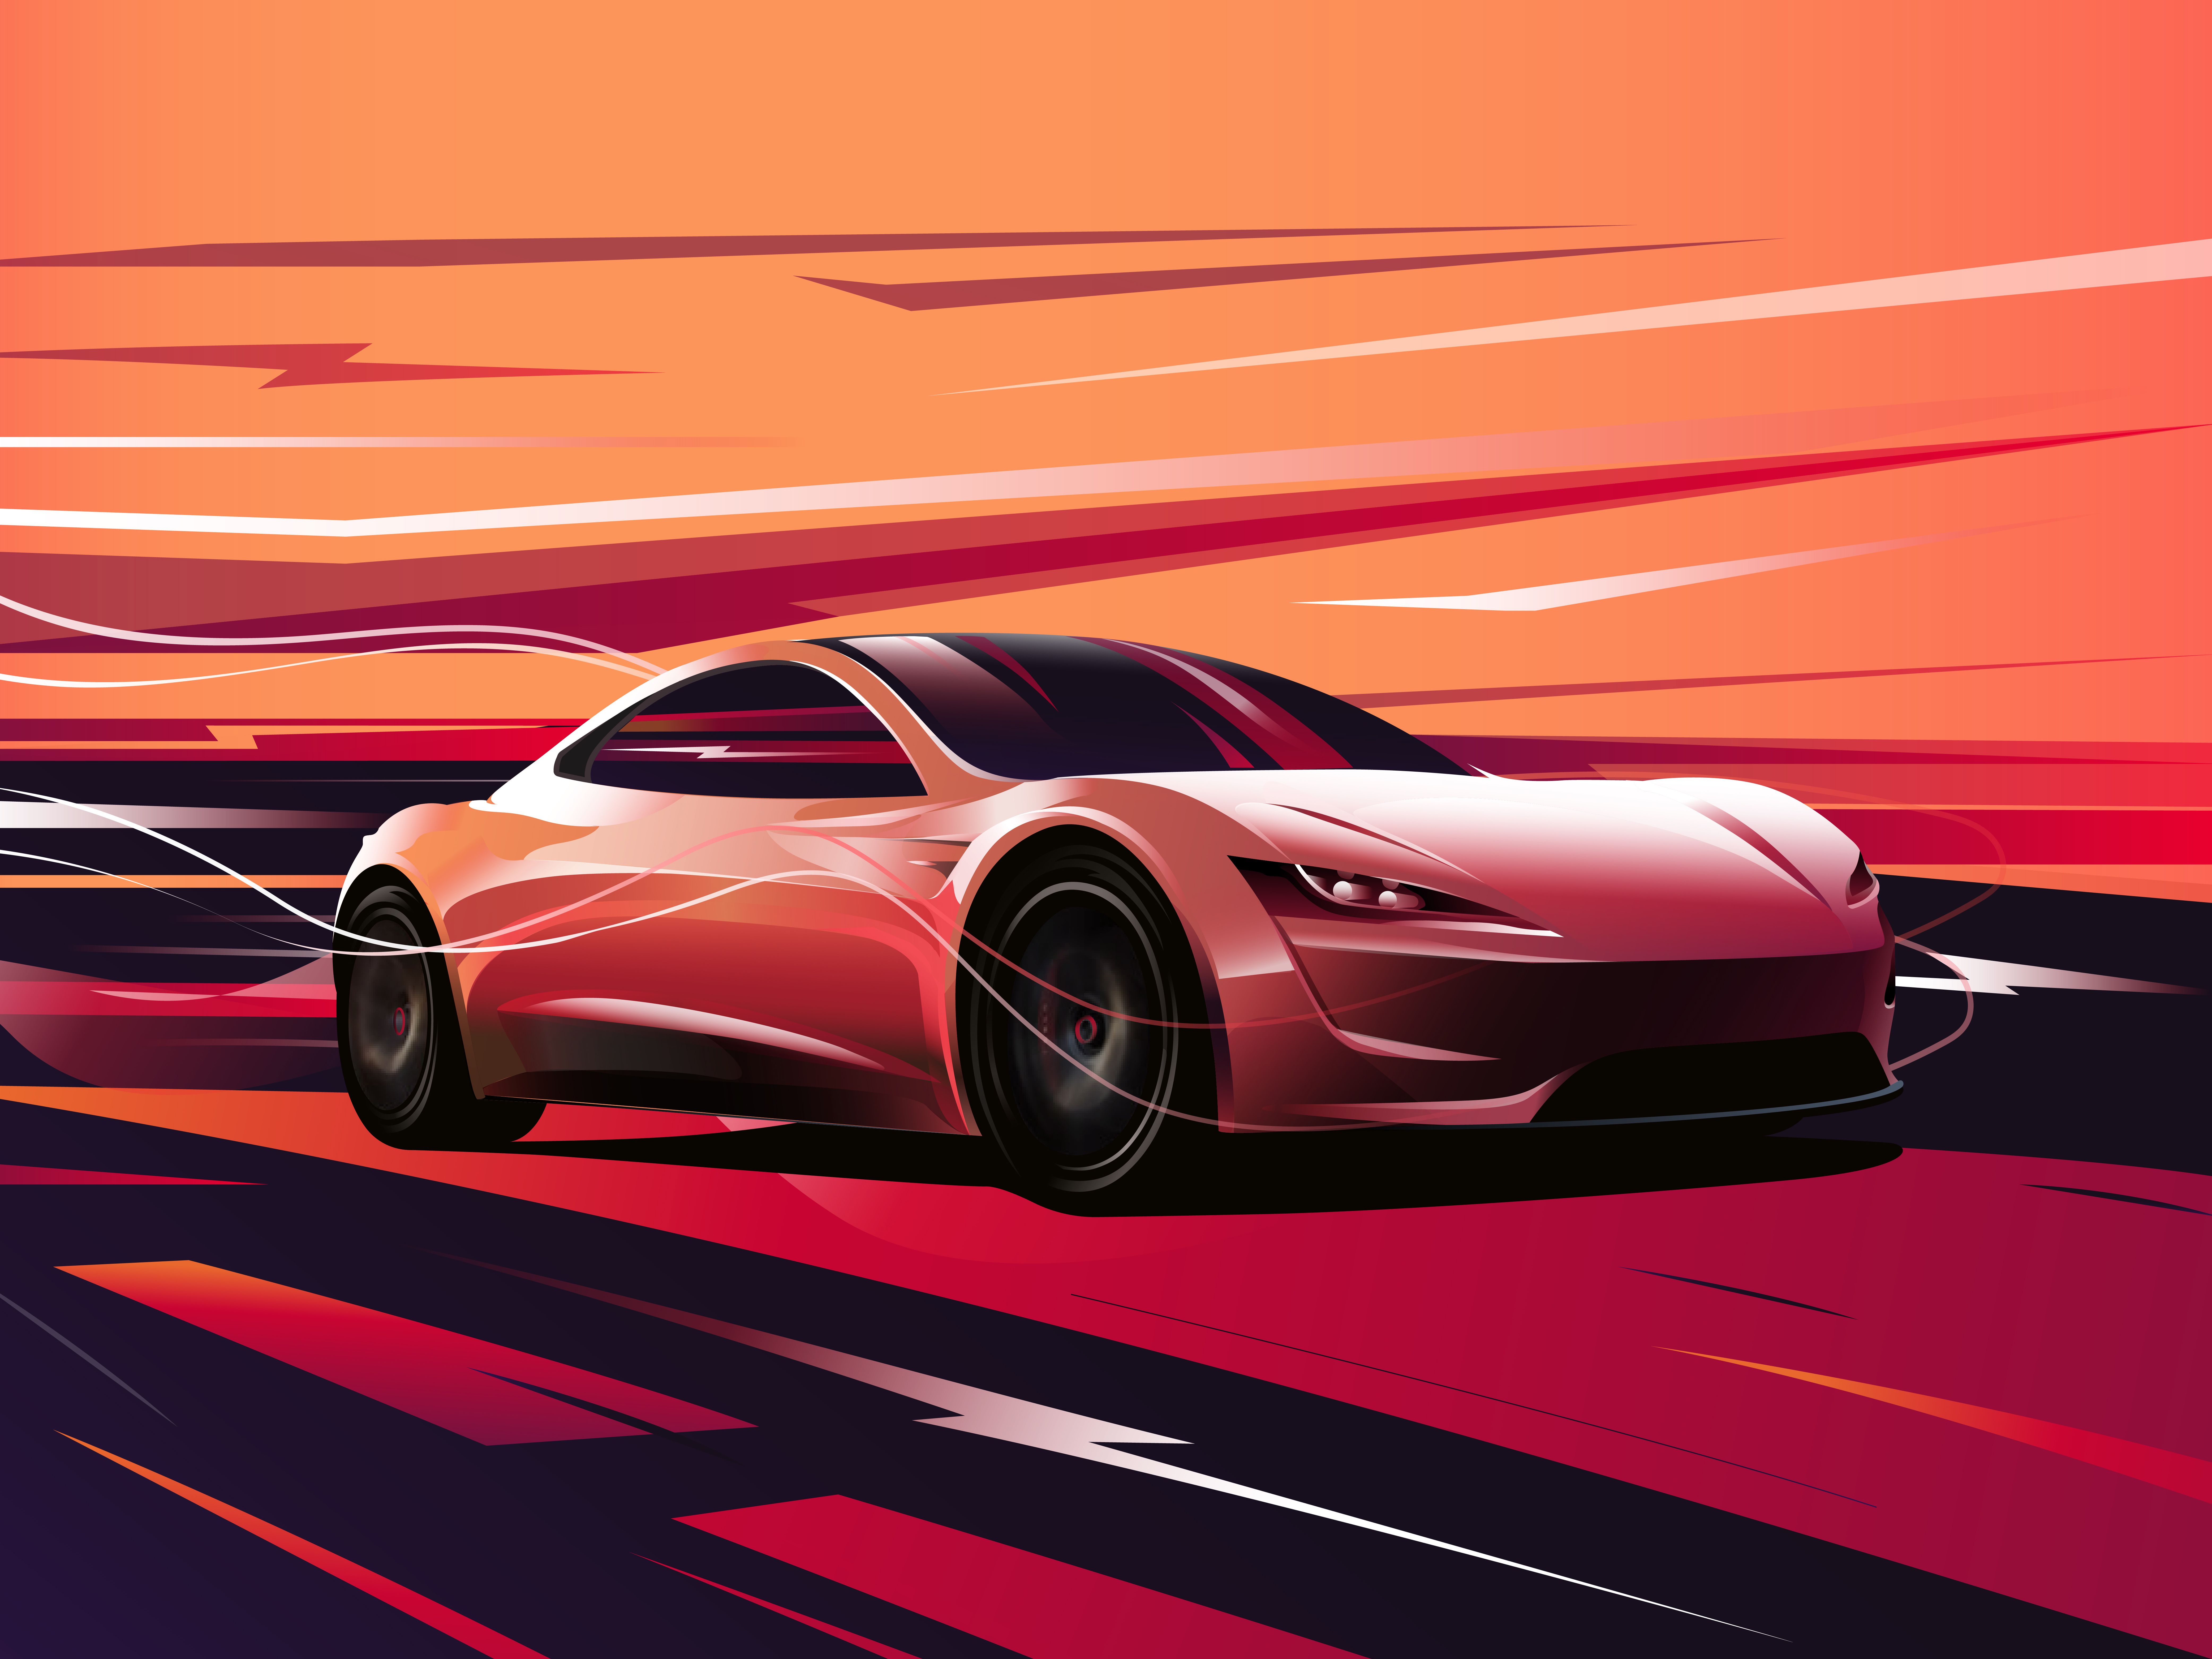 Tesla Roadster Digital Art 8k, HD Cars, 4k Wallpaper, Image, Background, Photo and Picture